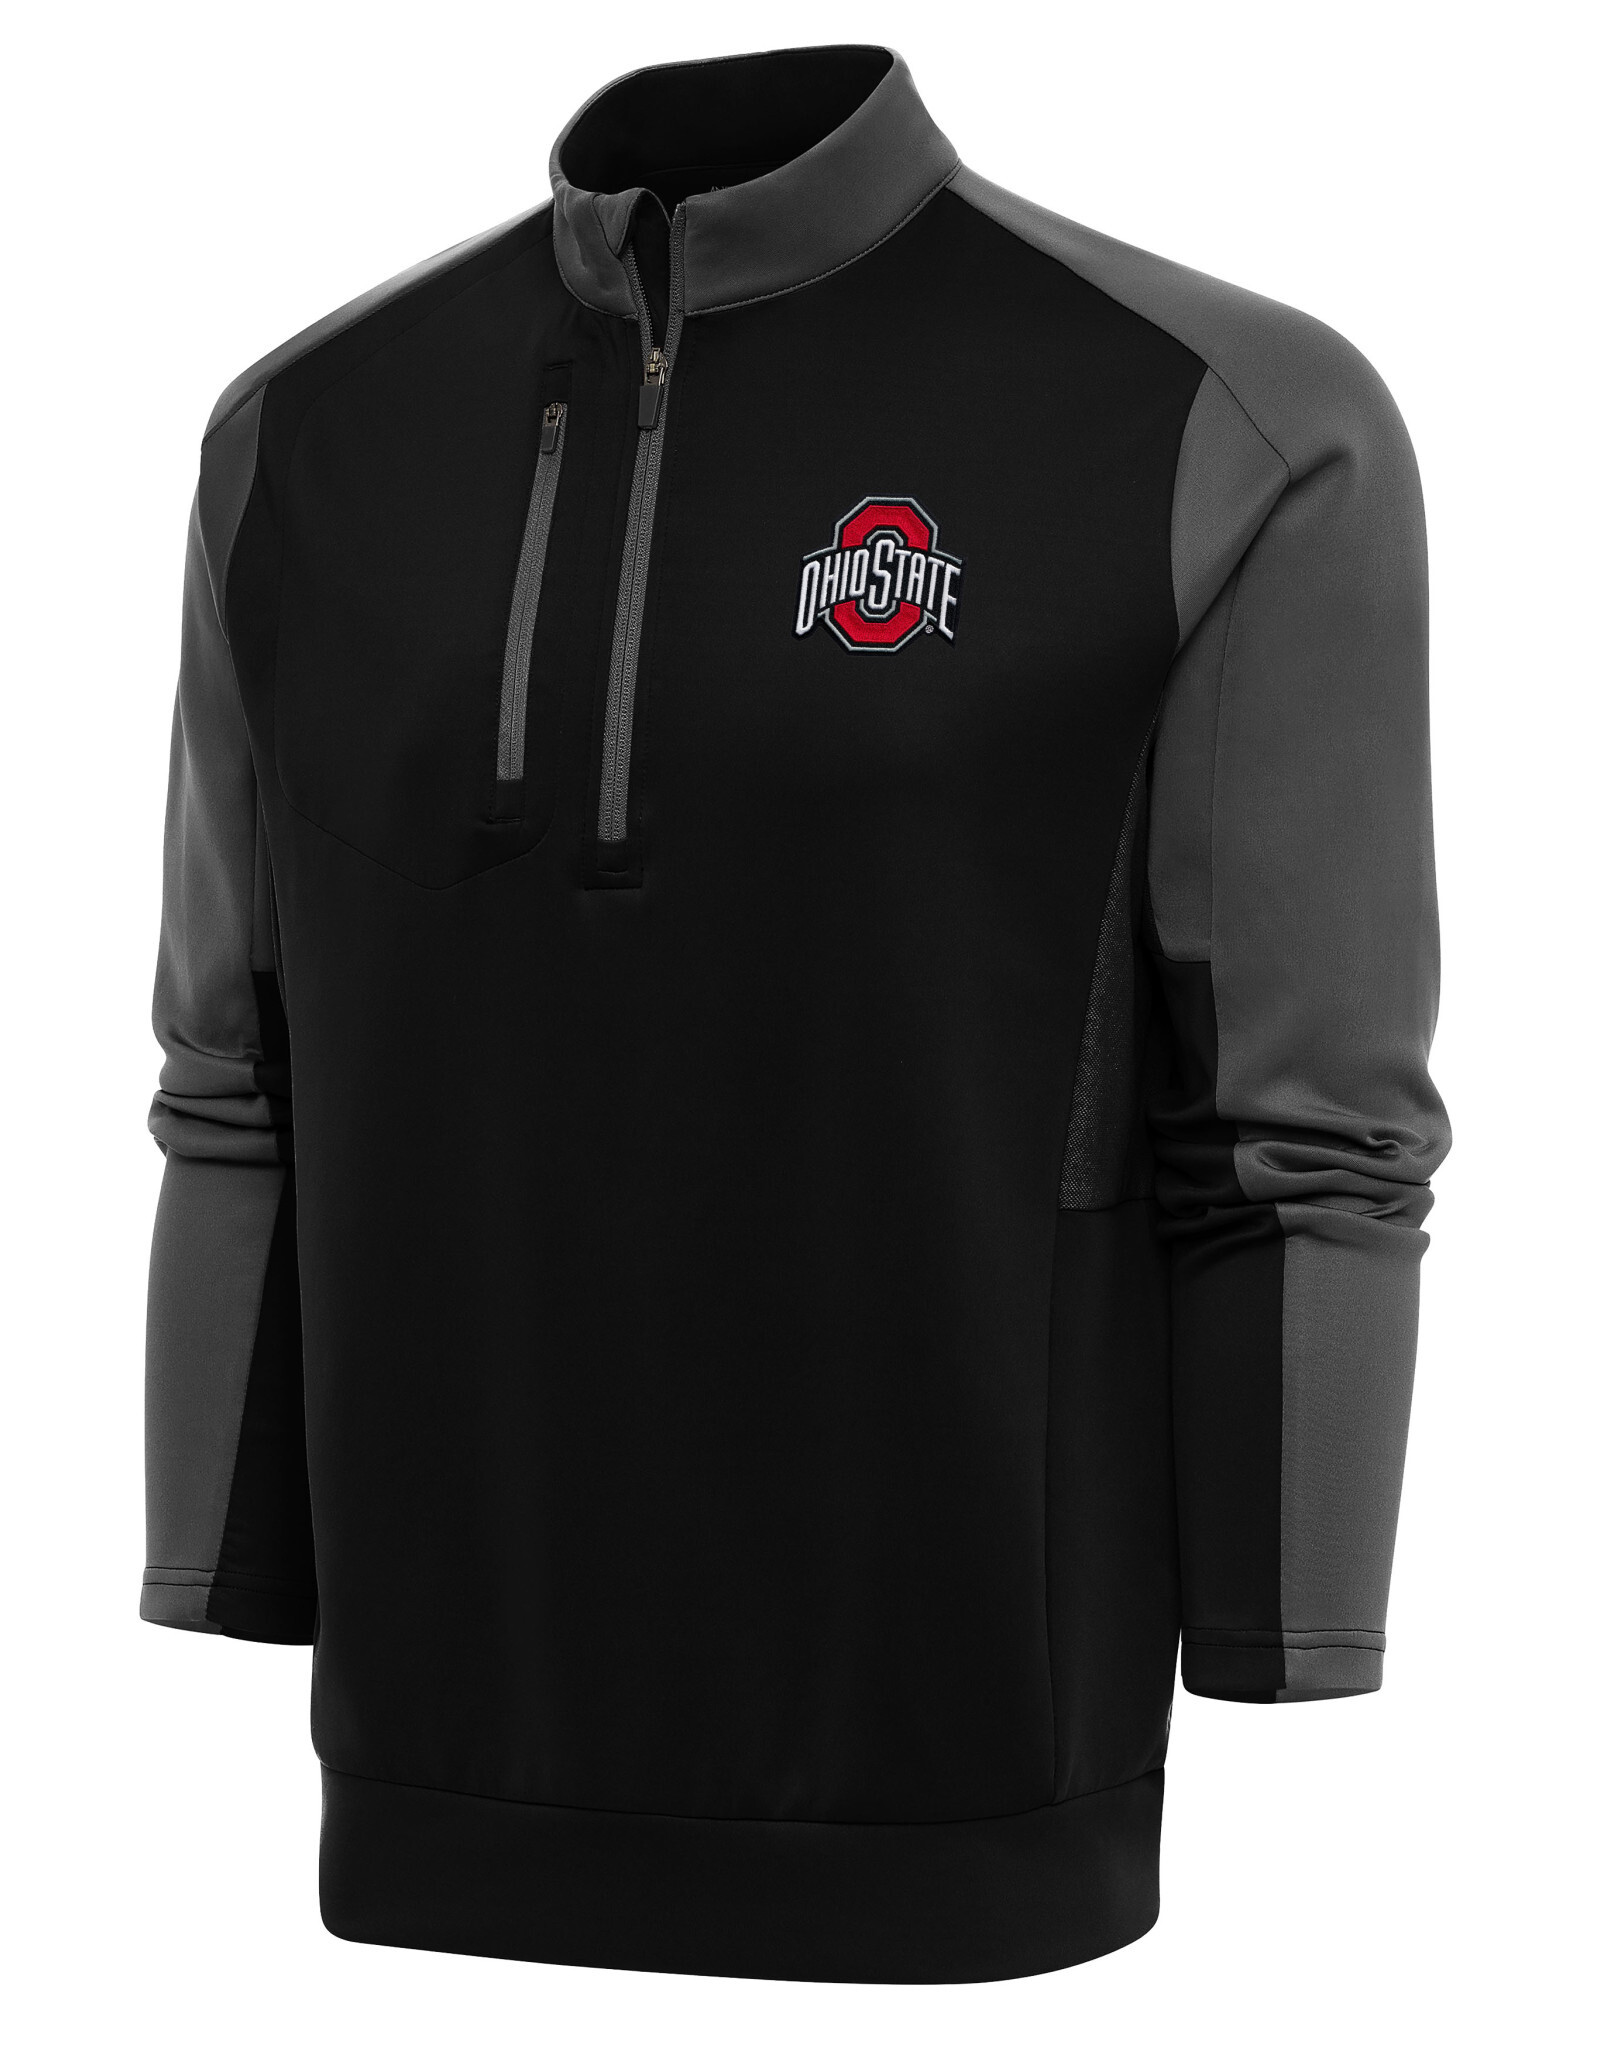 ANTIGUA Ohio State Buckeyes Men's Team Quarter Zip Pullover Top - Black/Grey